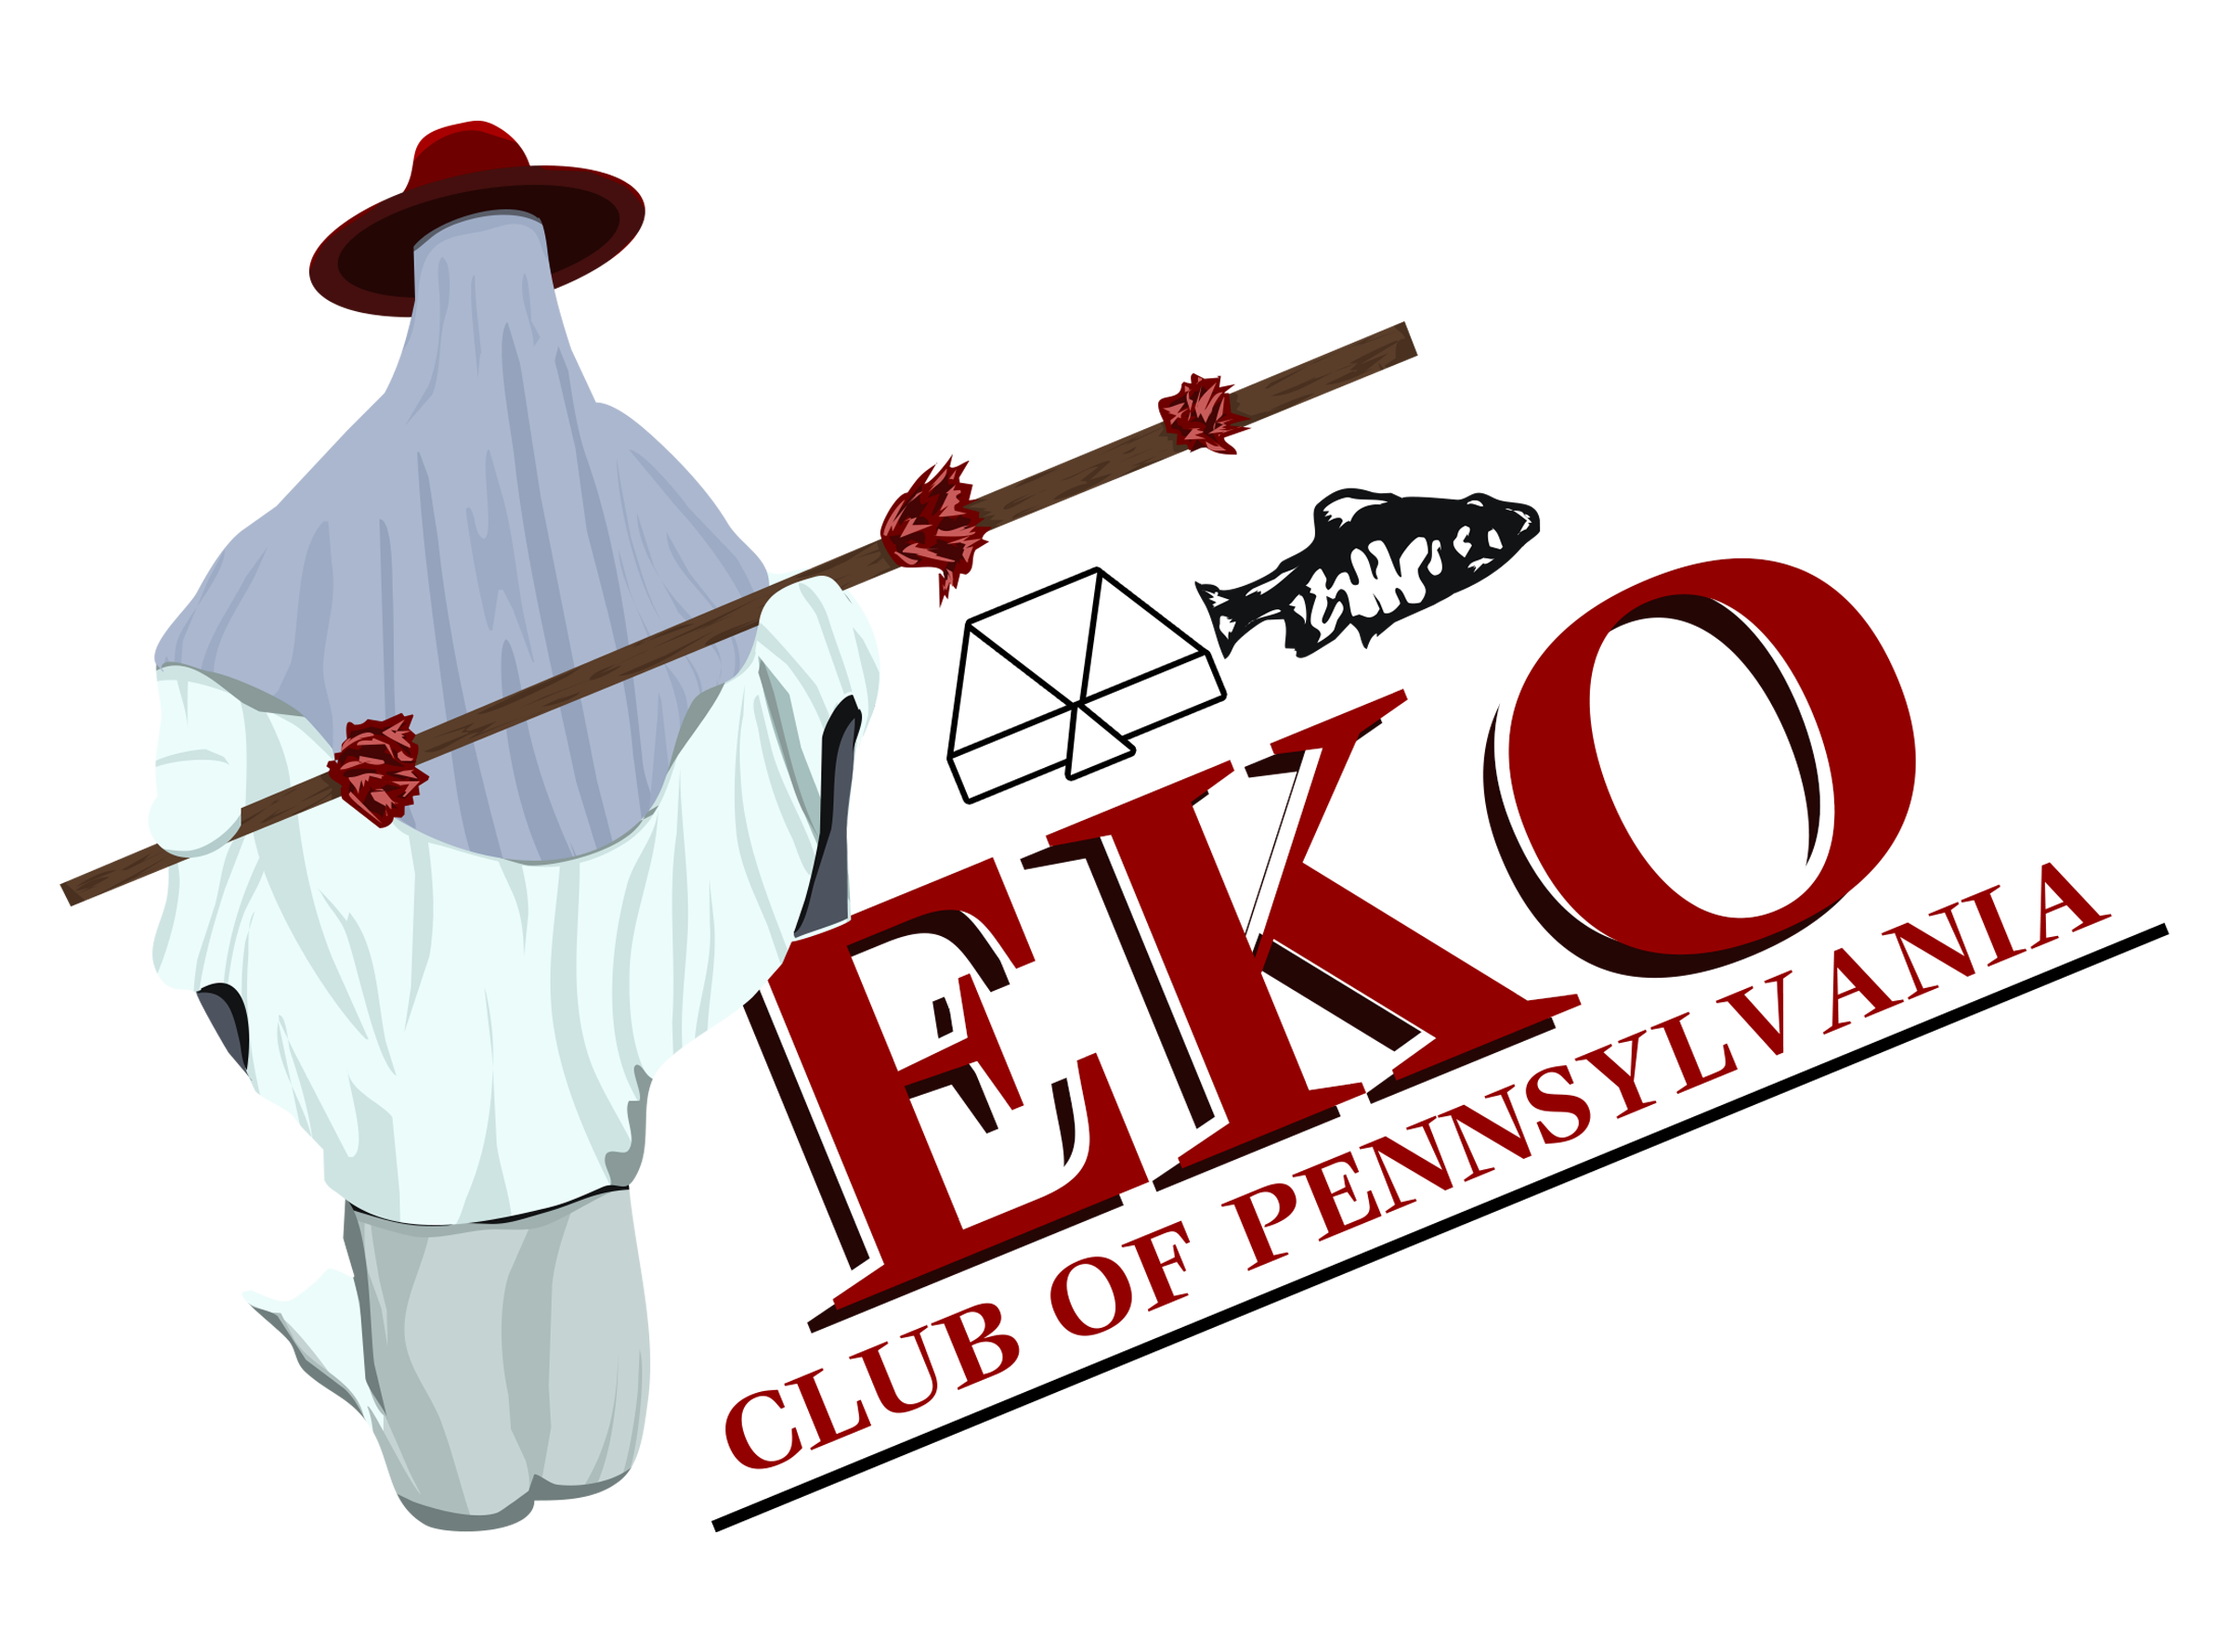 Eko Club of Pennsylvania